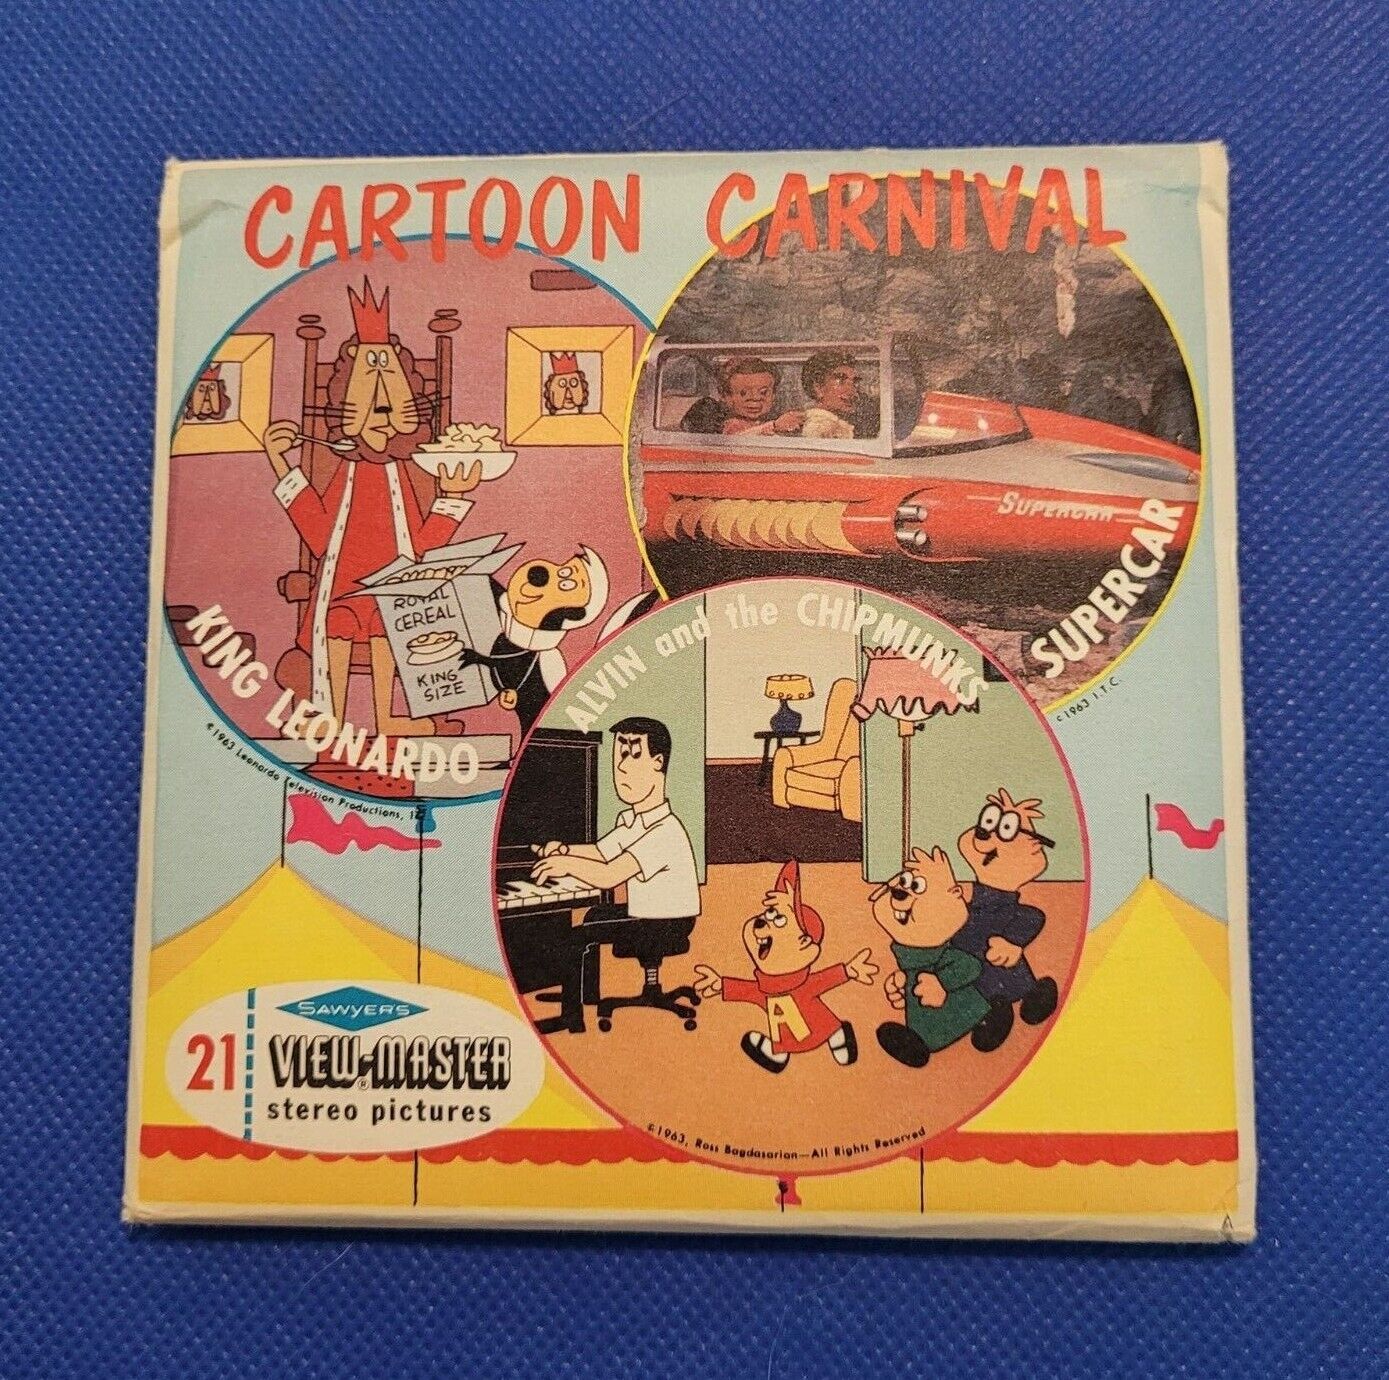 Scarce Sawyer's B521 Cartoon Carnival Cartoons TV Shows view-master Reels Packet